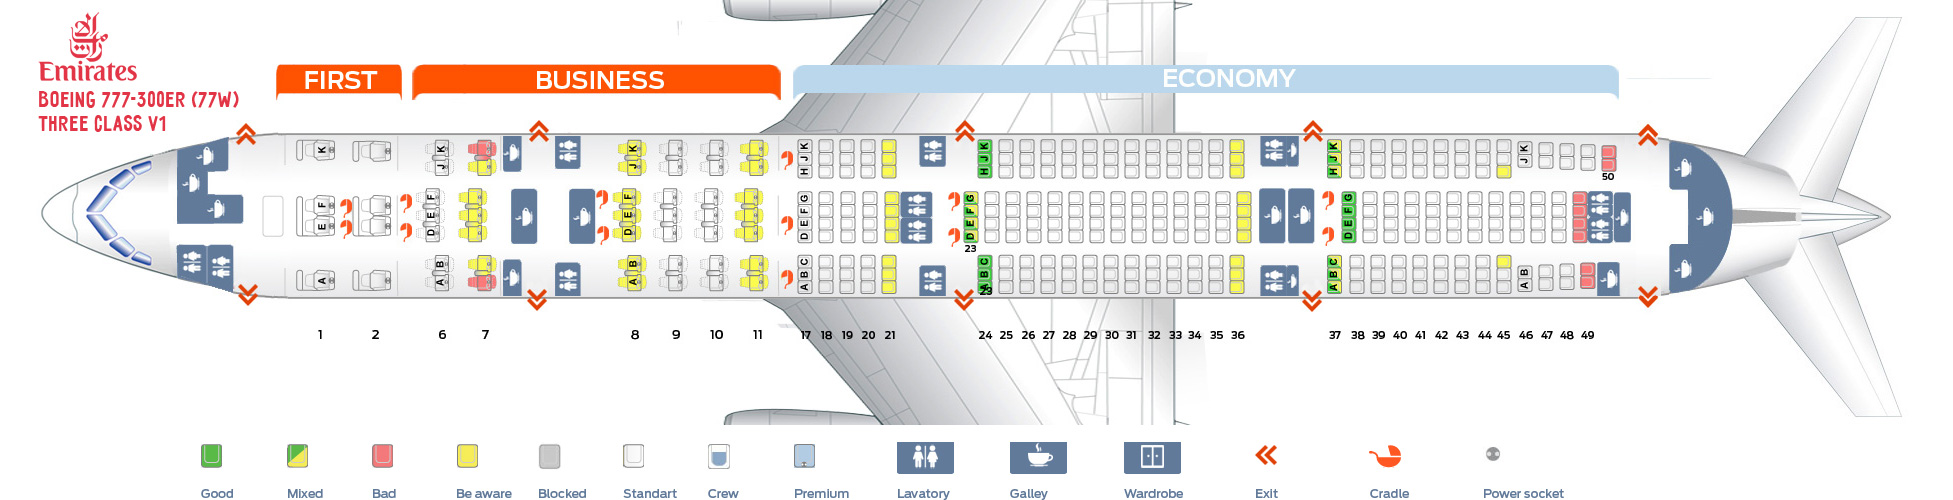 Emirates Boeing 777 30er Seating Plan | Brokeasshome.com